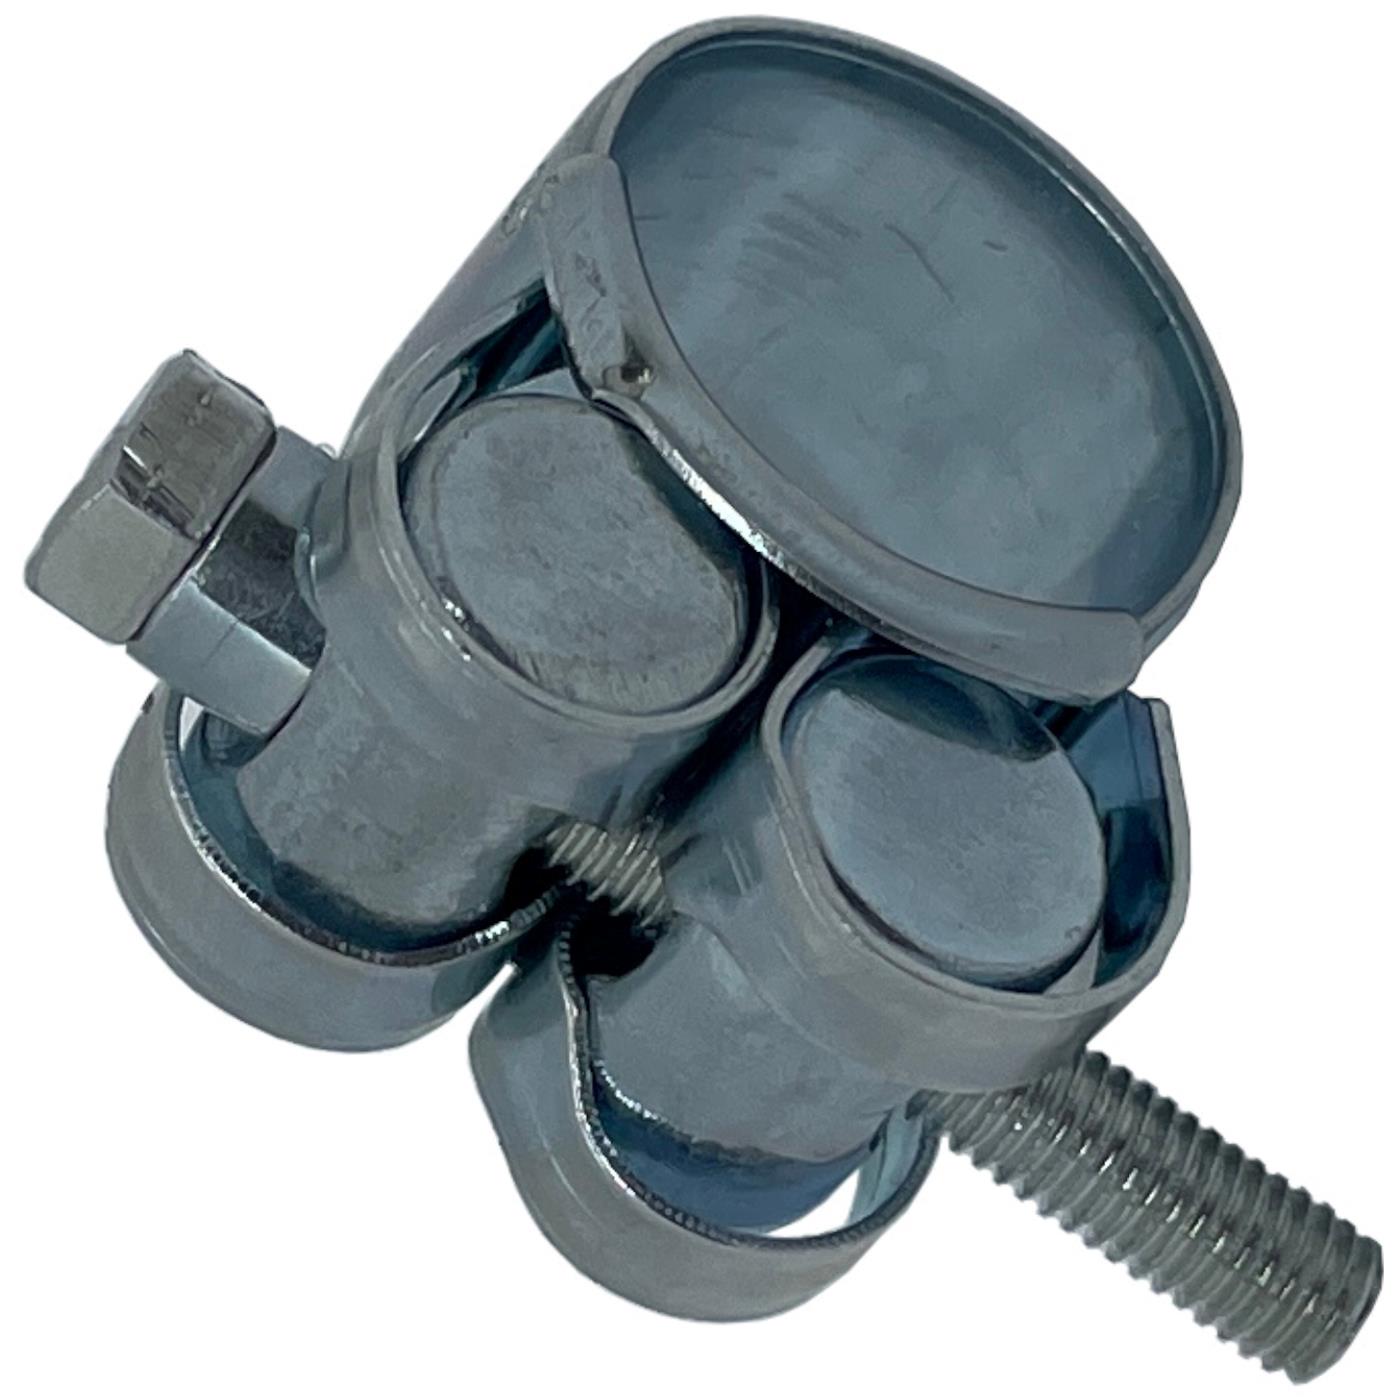 4x Lumonic Hinge pin clamp 17-19mm Galvanised Exhaust clamp for construction cars trucks